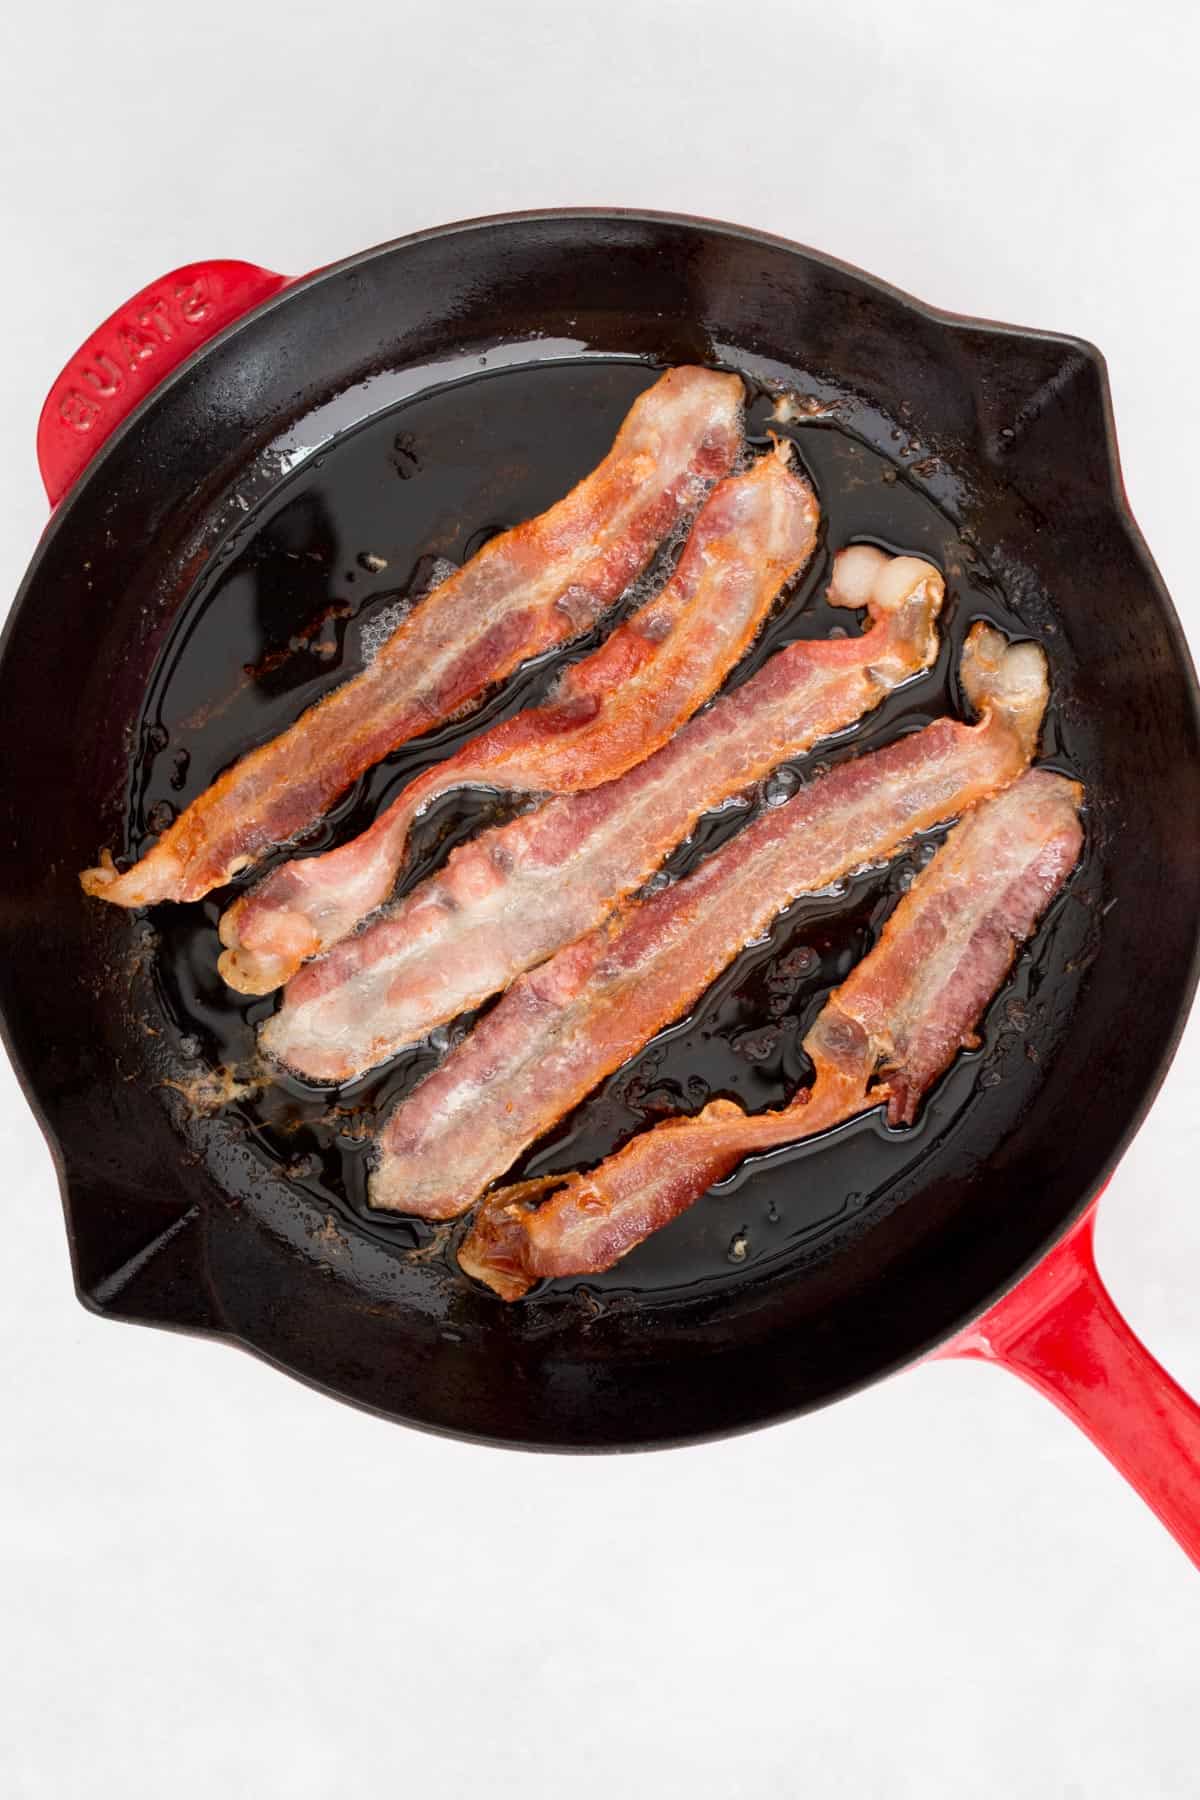 Bacon in a staub frying pan.